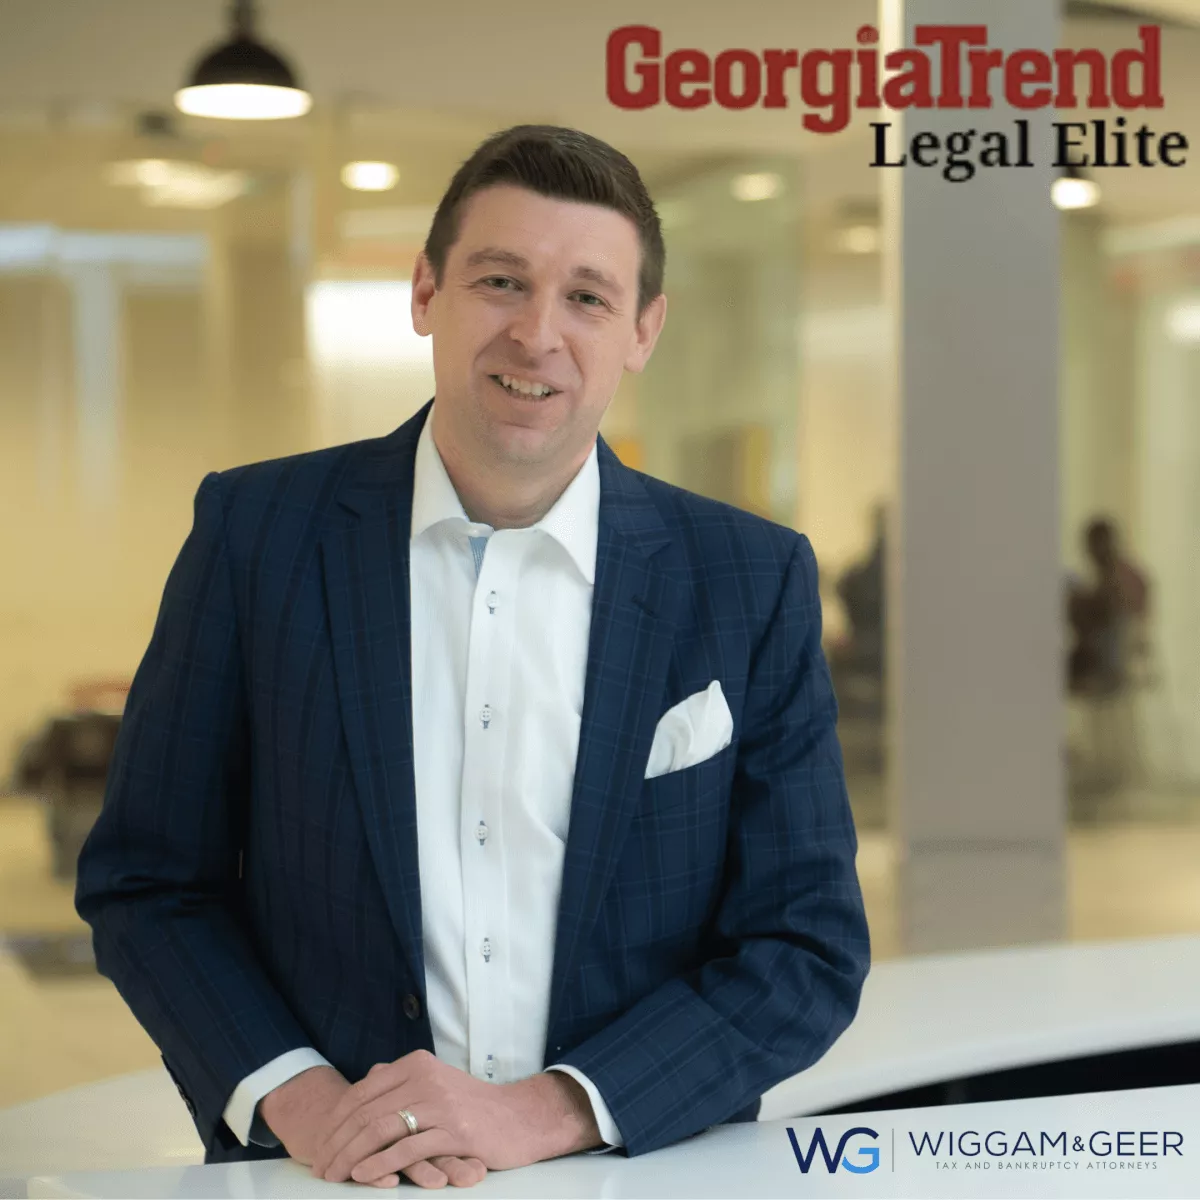 Jason Wiggam named Legal Elite on cover of Georgia Trend magazine